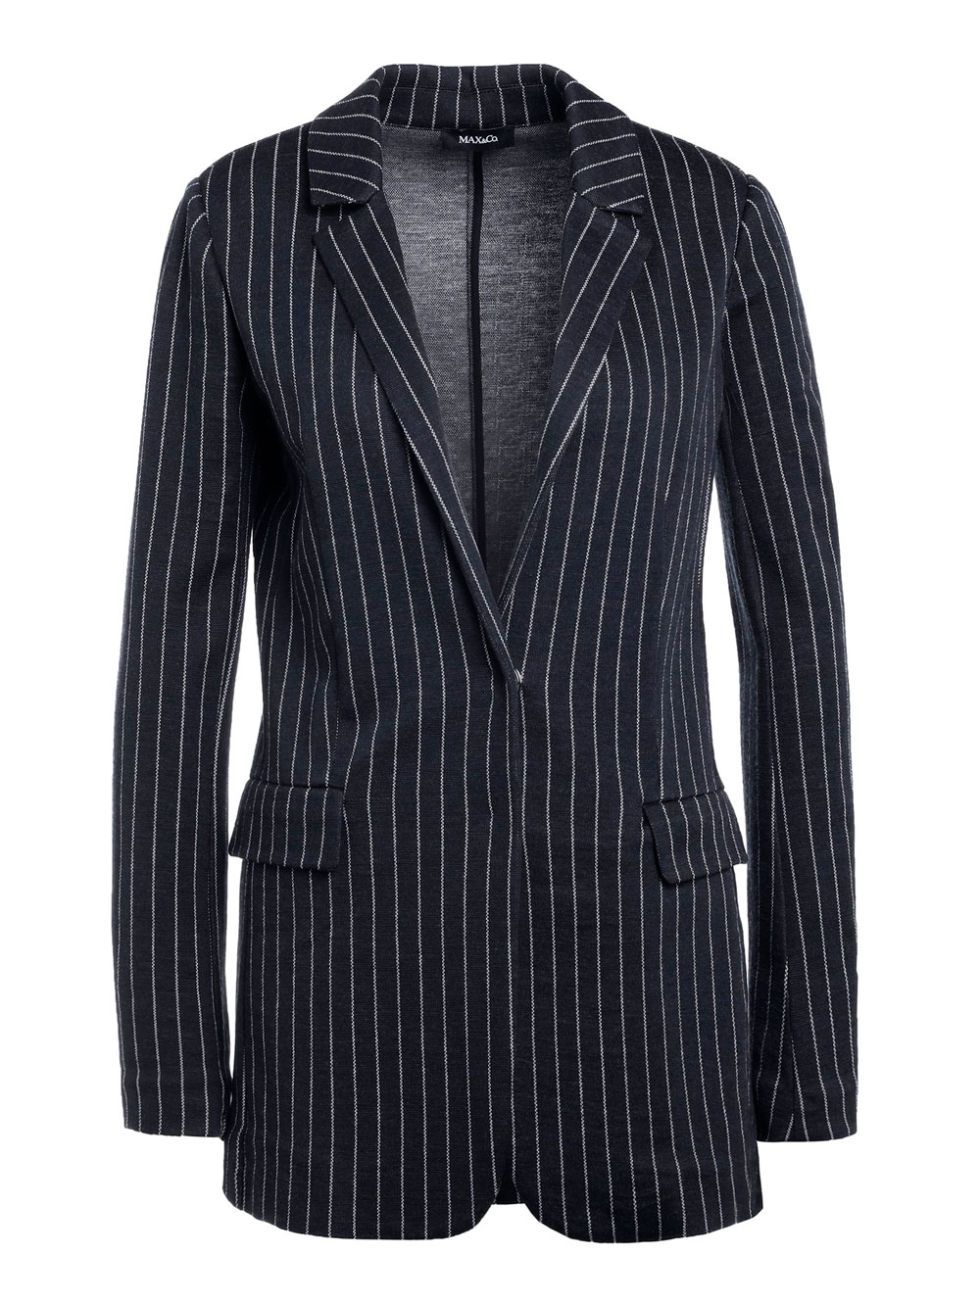 Clothing, Outerwear, Black, Jacket, Blazer, Sleeve, Top, Pattern, Suit, 